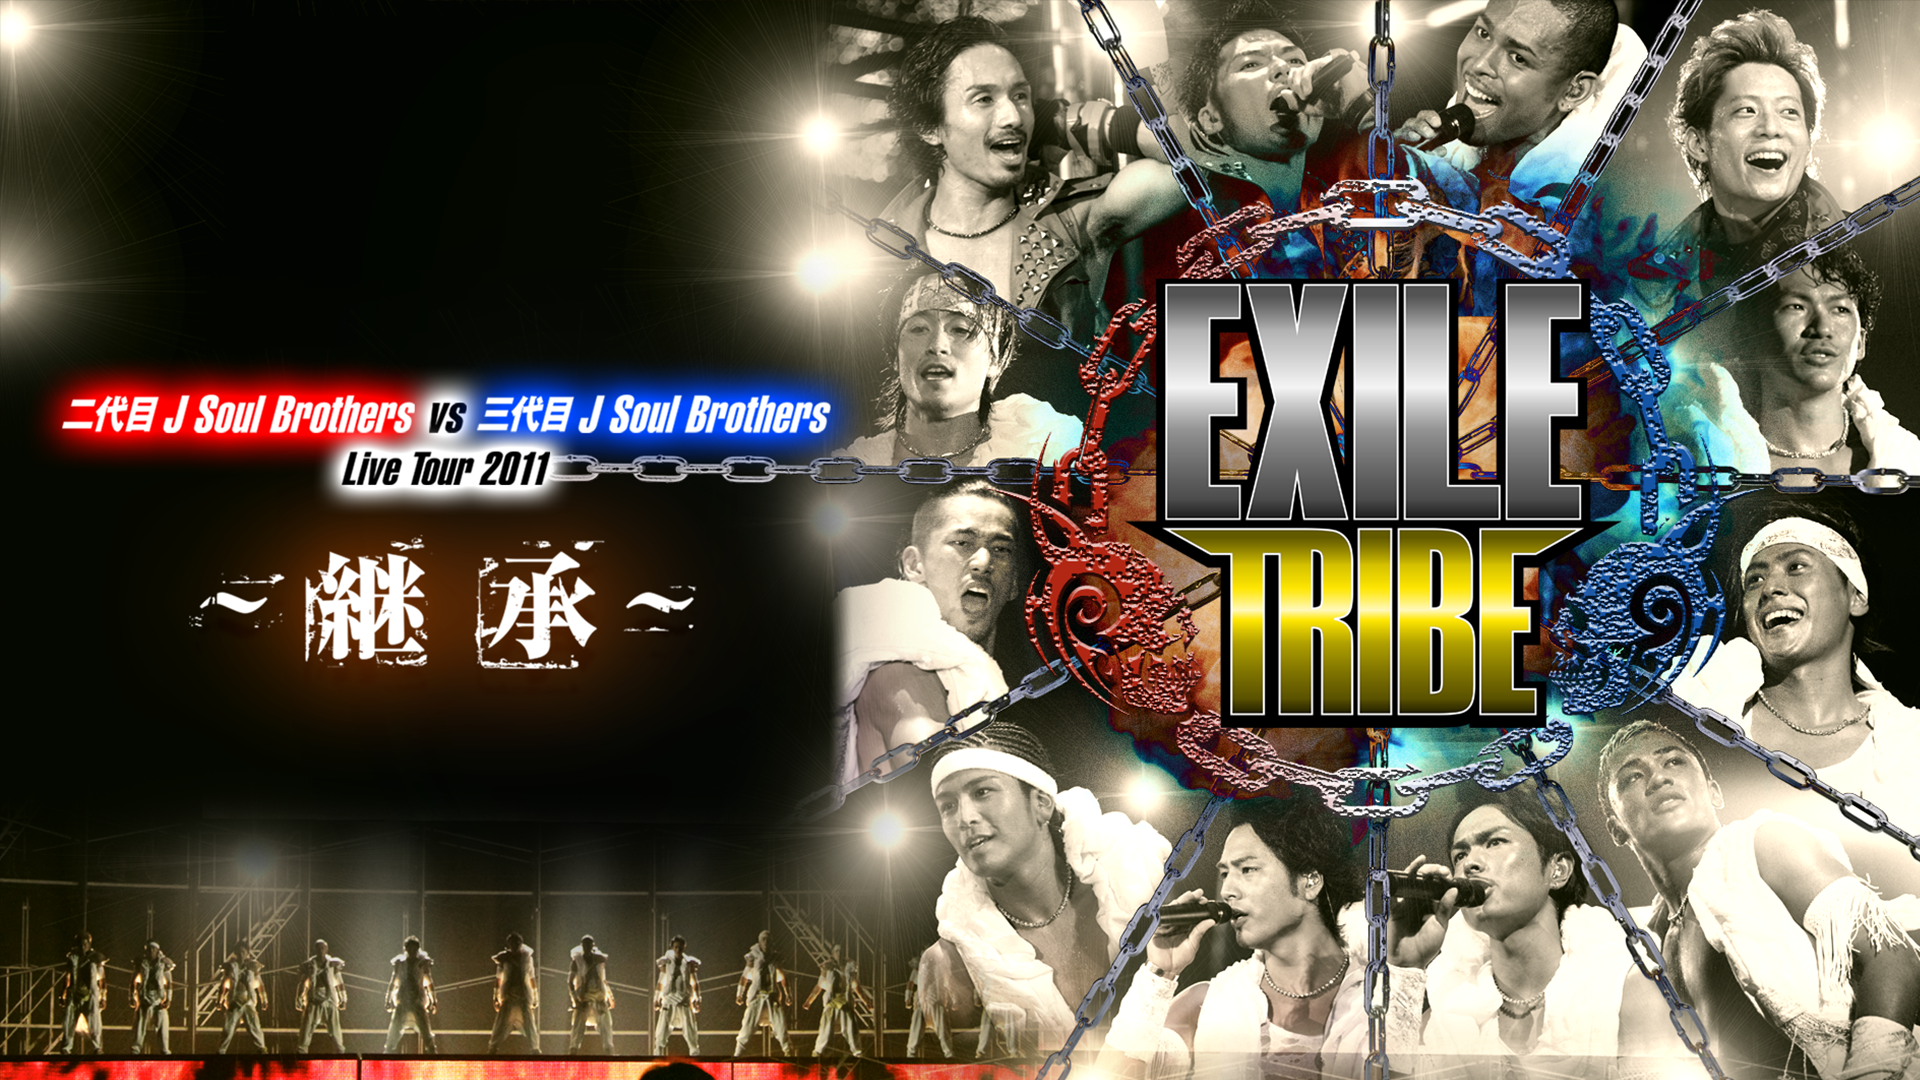 EXILE TRIBE 二代目 J Soul Brothers VS 三代目 J Soul Brothers Live